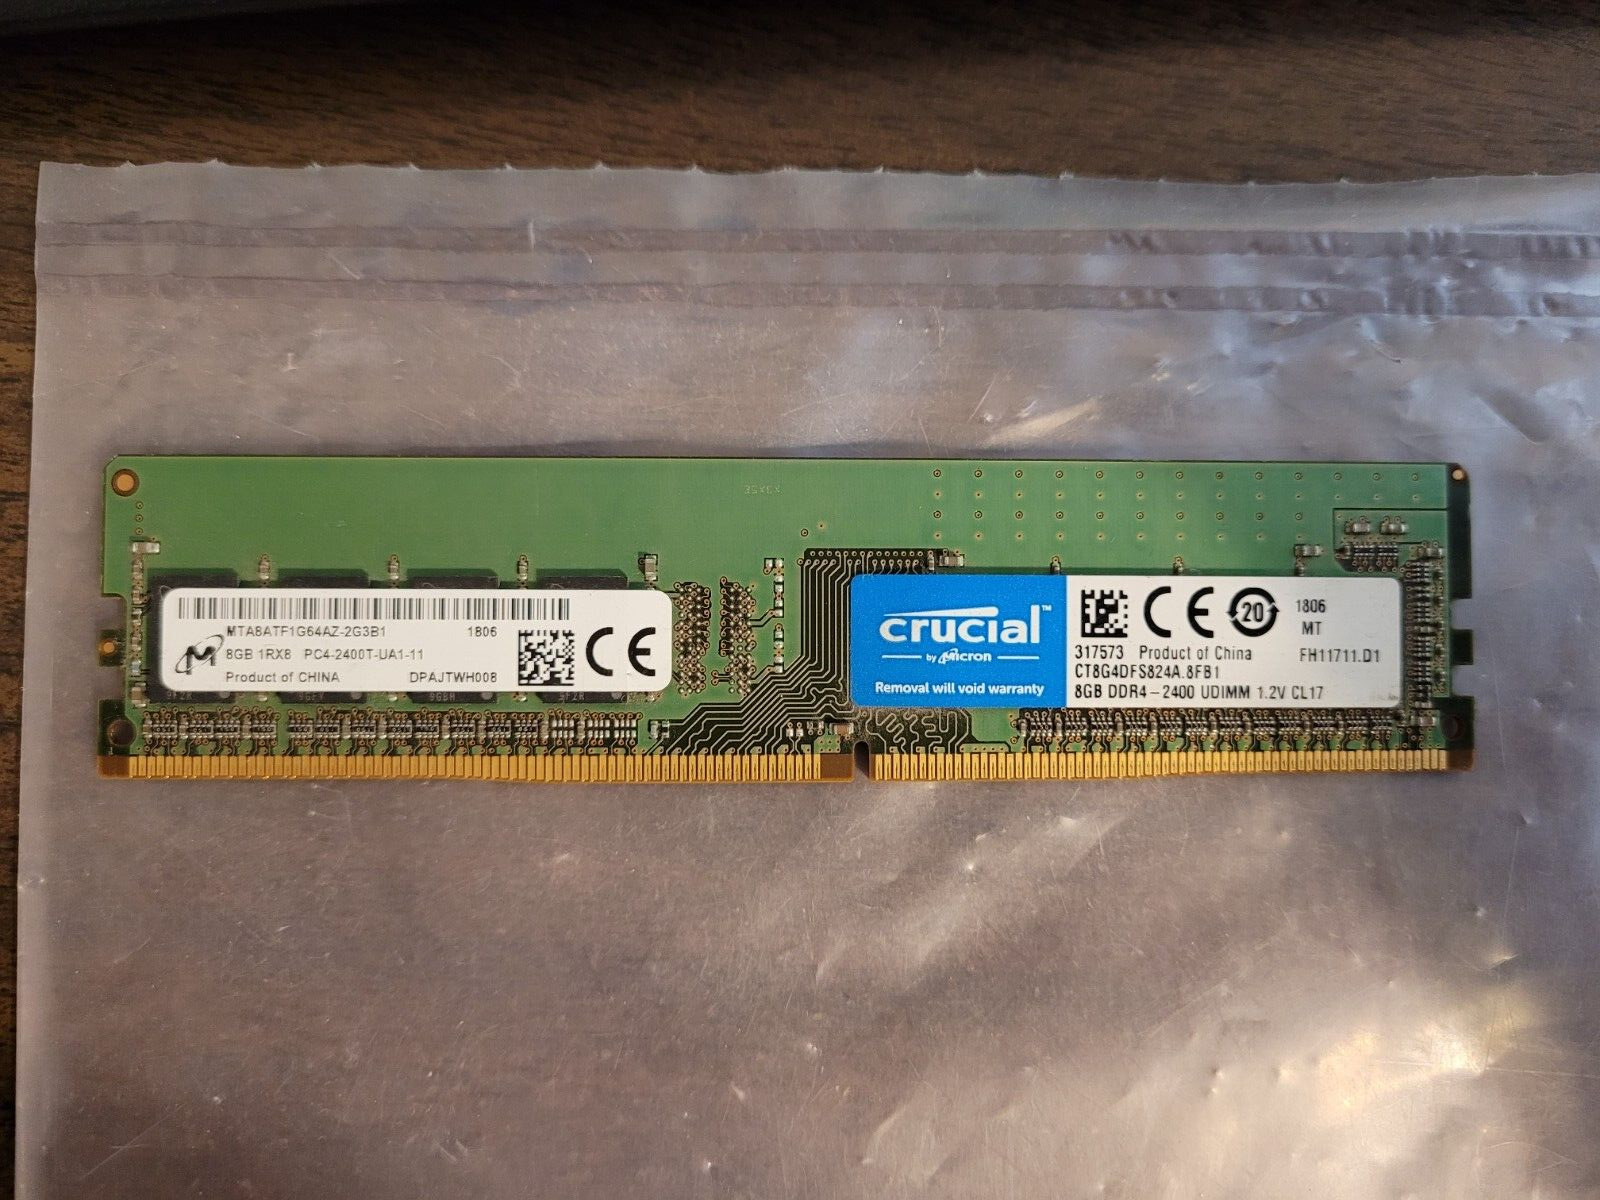 Crucial-Micron 8GB PC4-2400 PC4 19200 DDR4 2400MHz CL17 1.2V Desktop Memory RAM